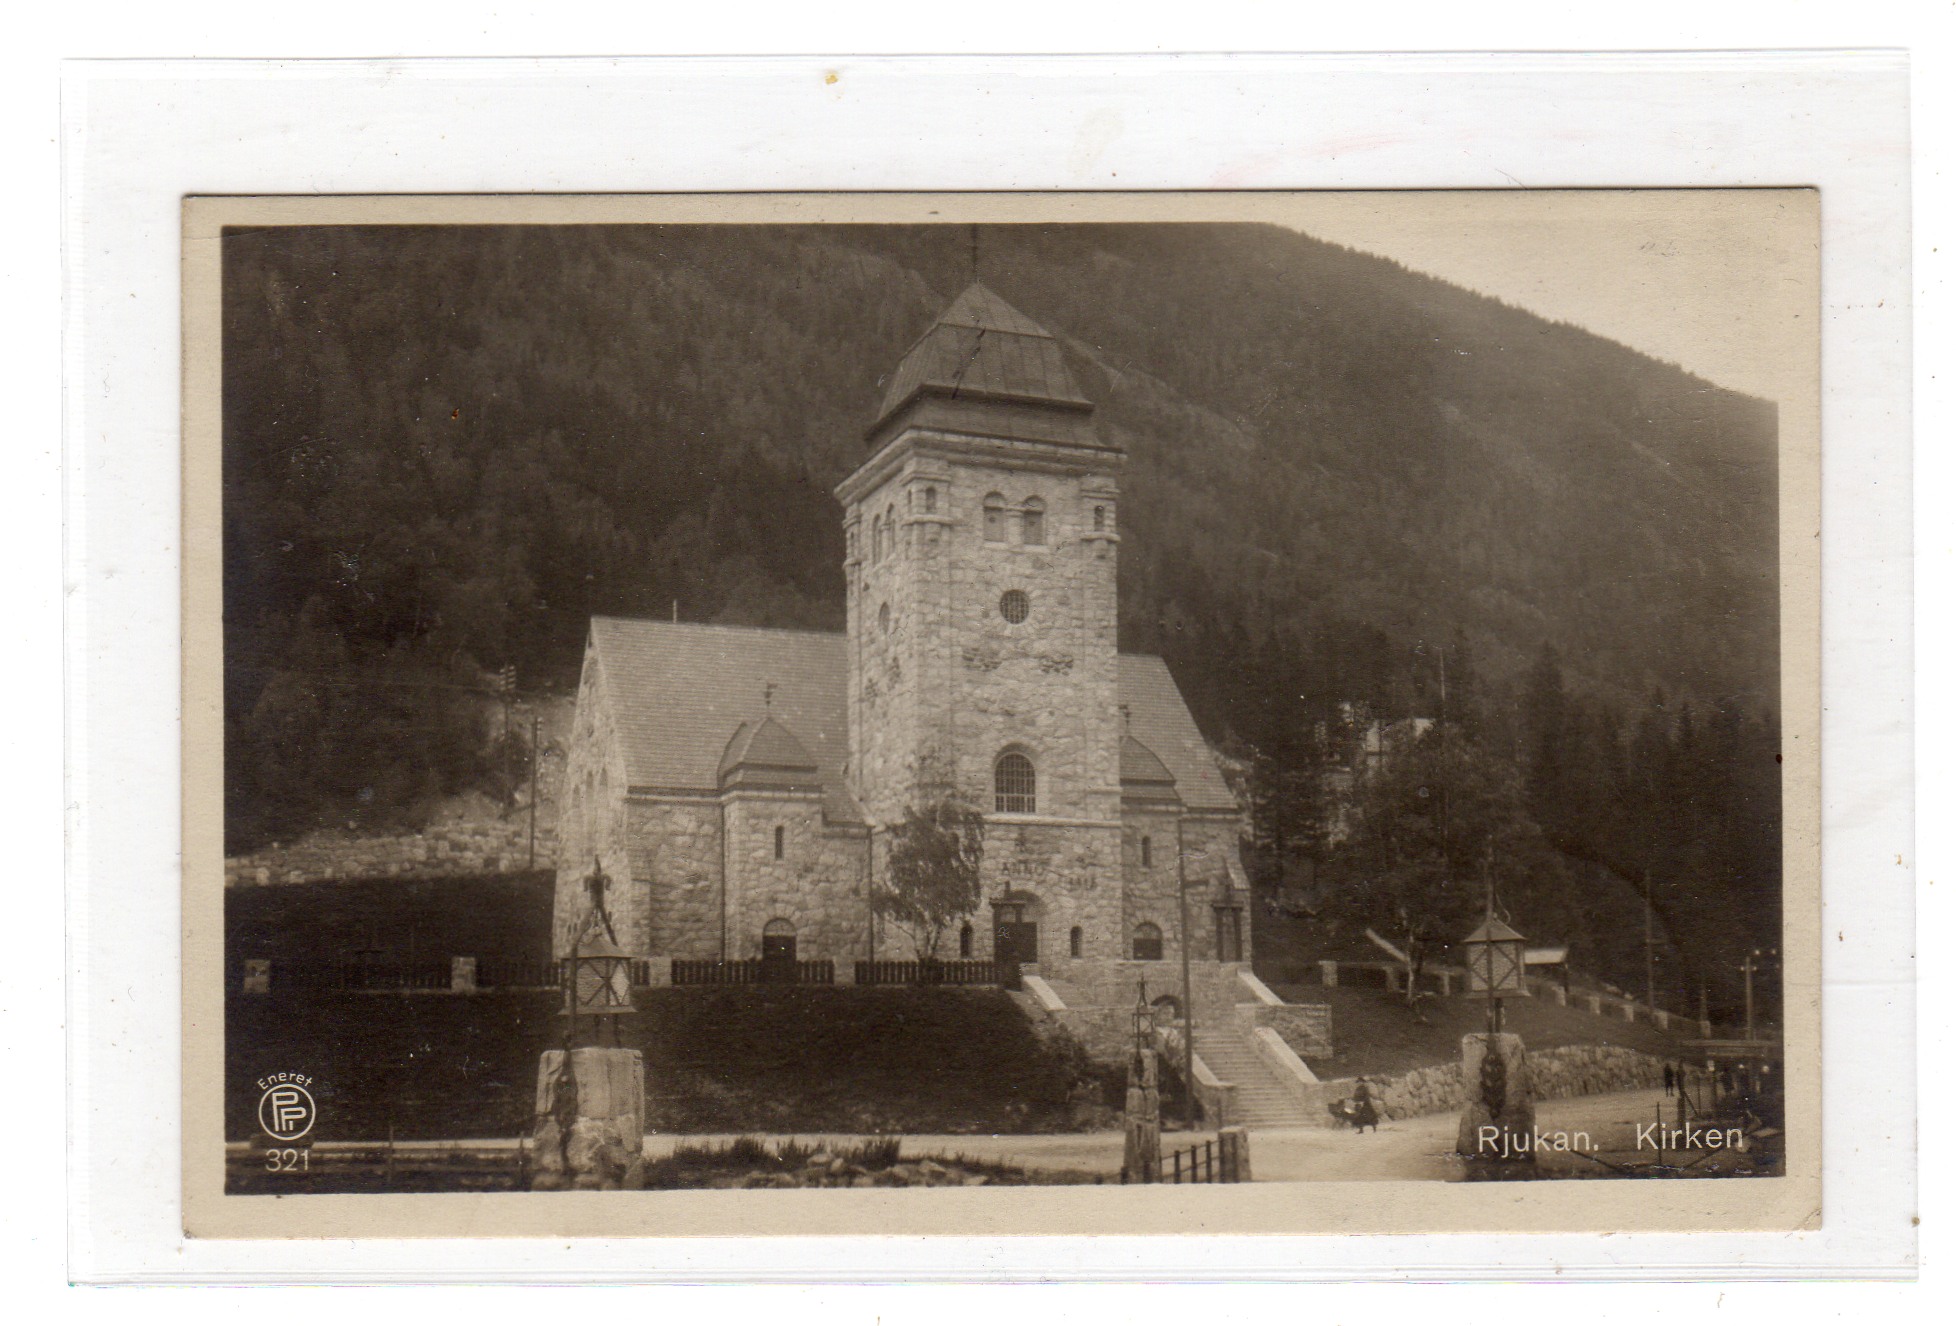 Rjukan Kirken PPI; 321 st Rjukan 1921